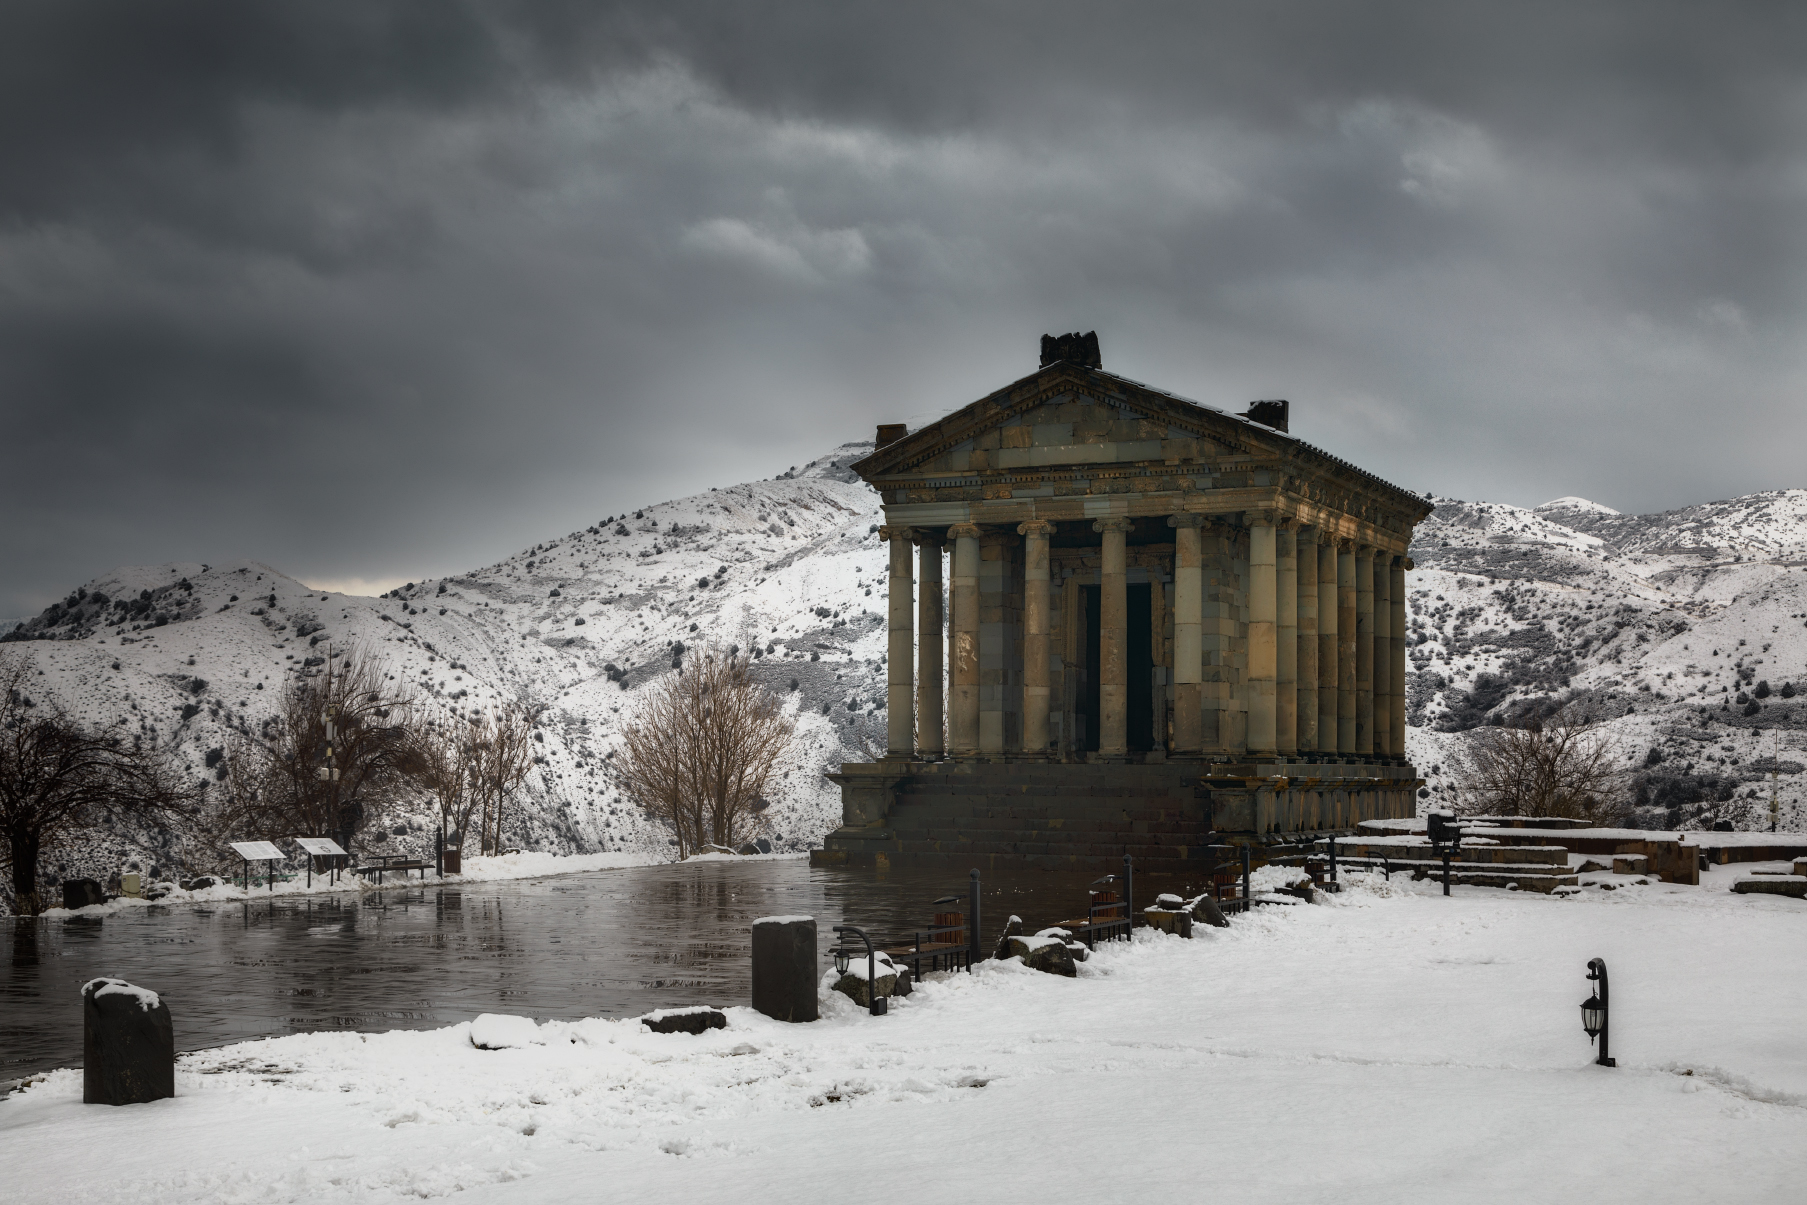  армения гарни храм античность, Шишкин Дмитрий